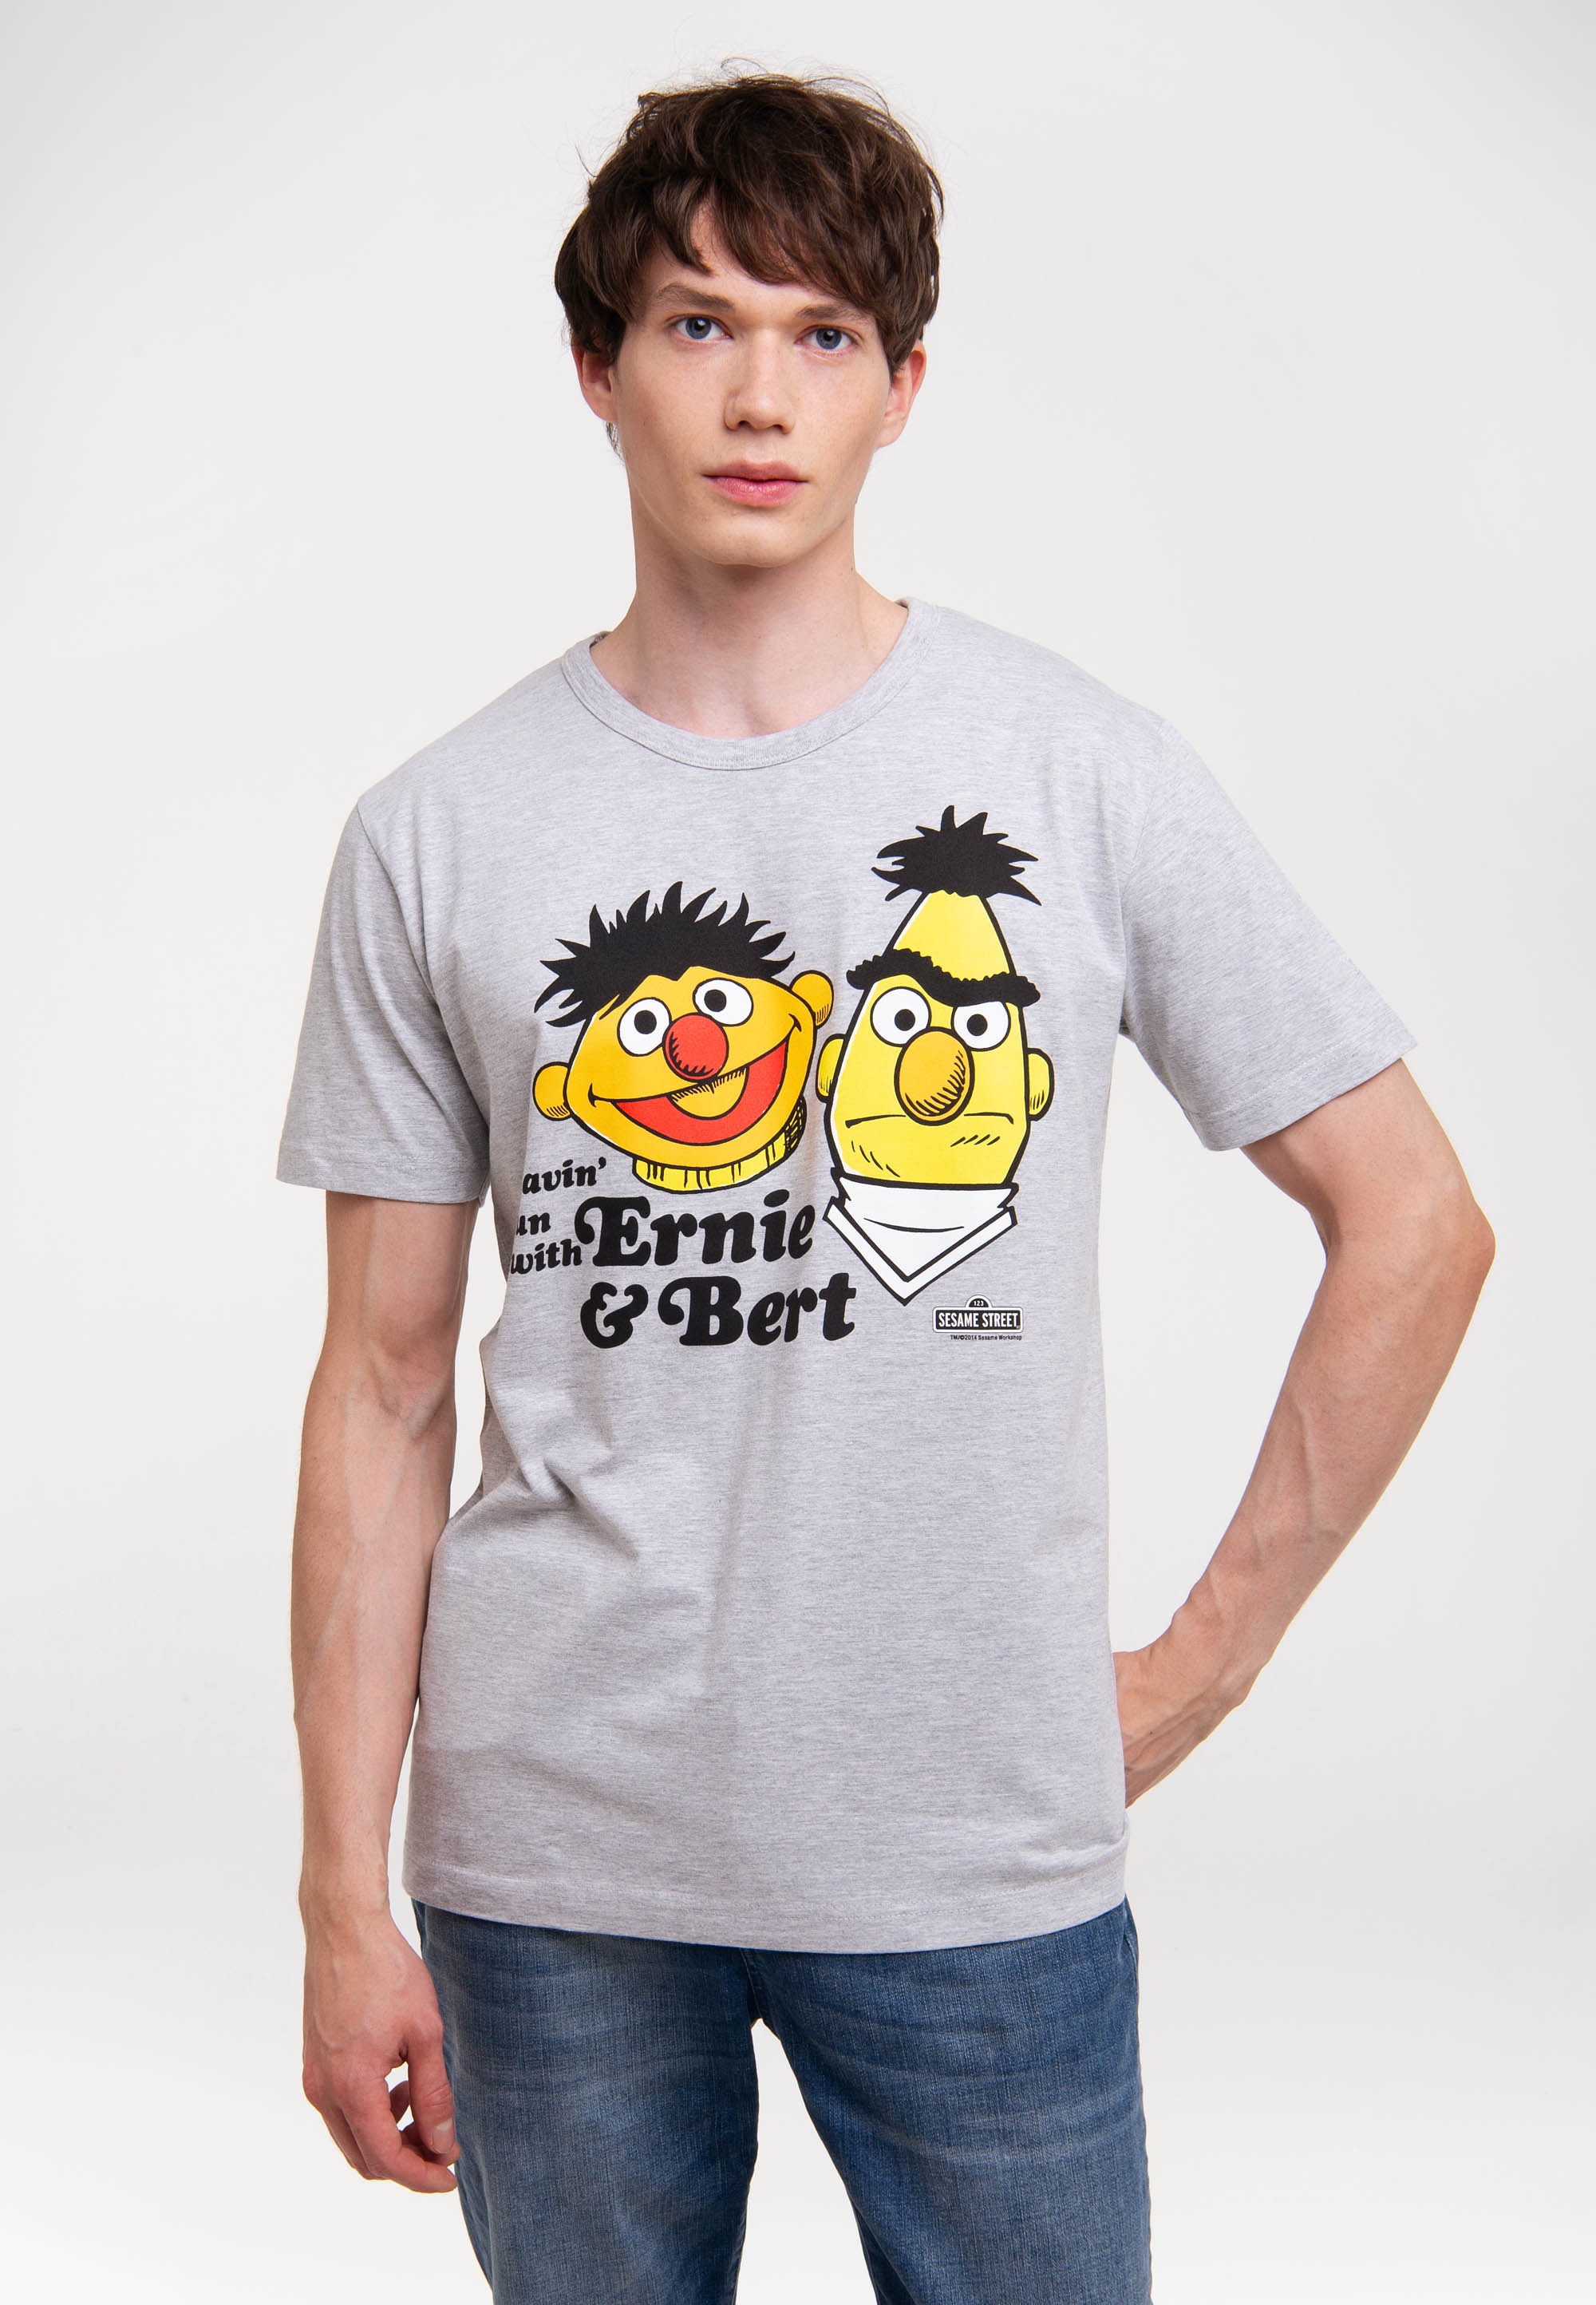 LOGOSHIRT T-Shirt »Ernie & Bert - Havin`Fun«, mit Retro-Print